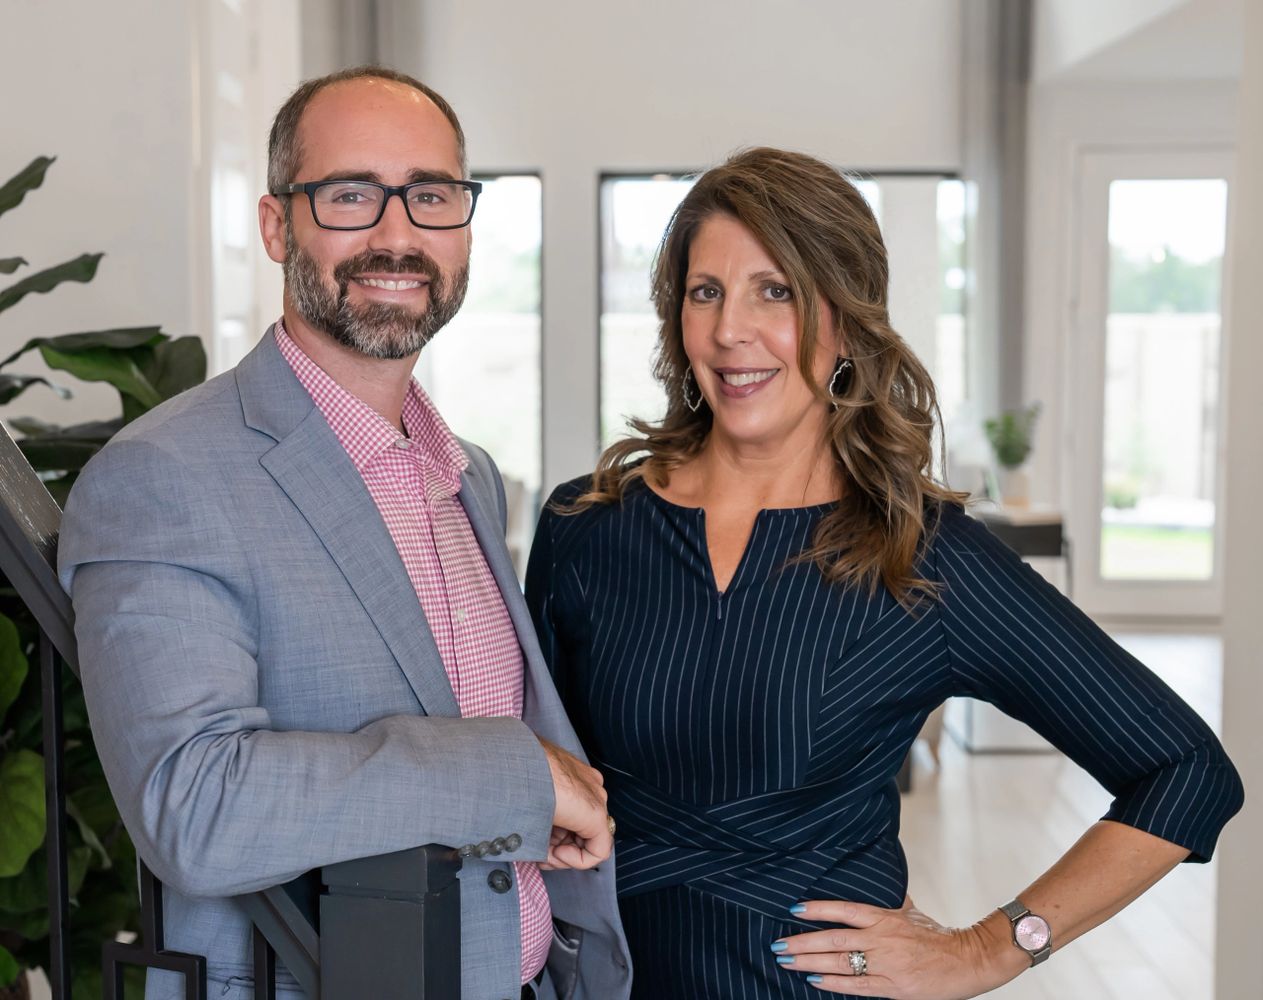 Scotty Gifford & Amber Gifford 
Divorce Real Estate Advisors